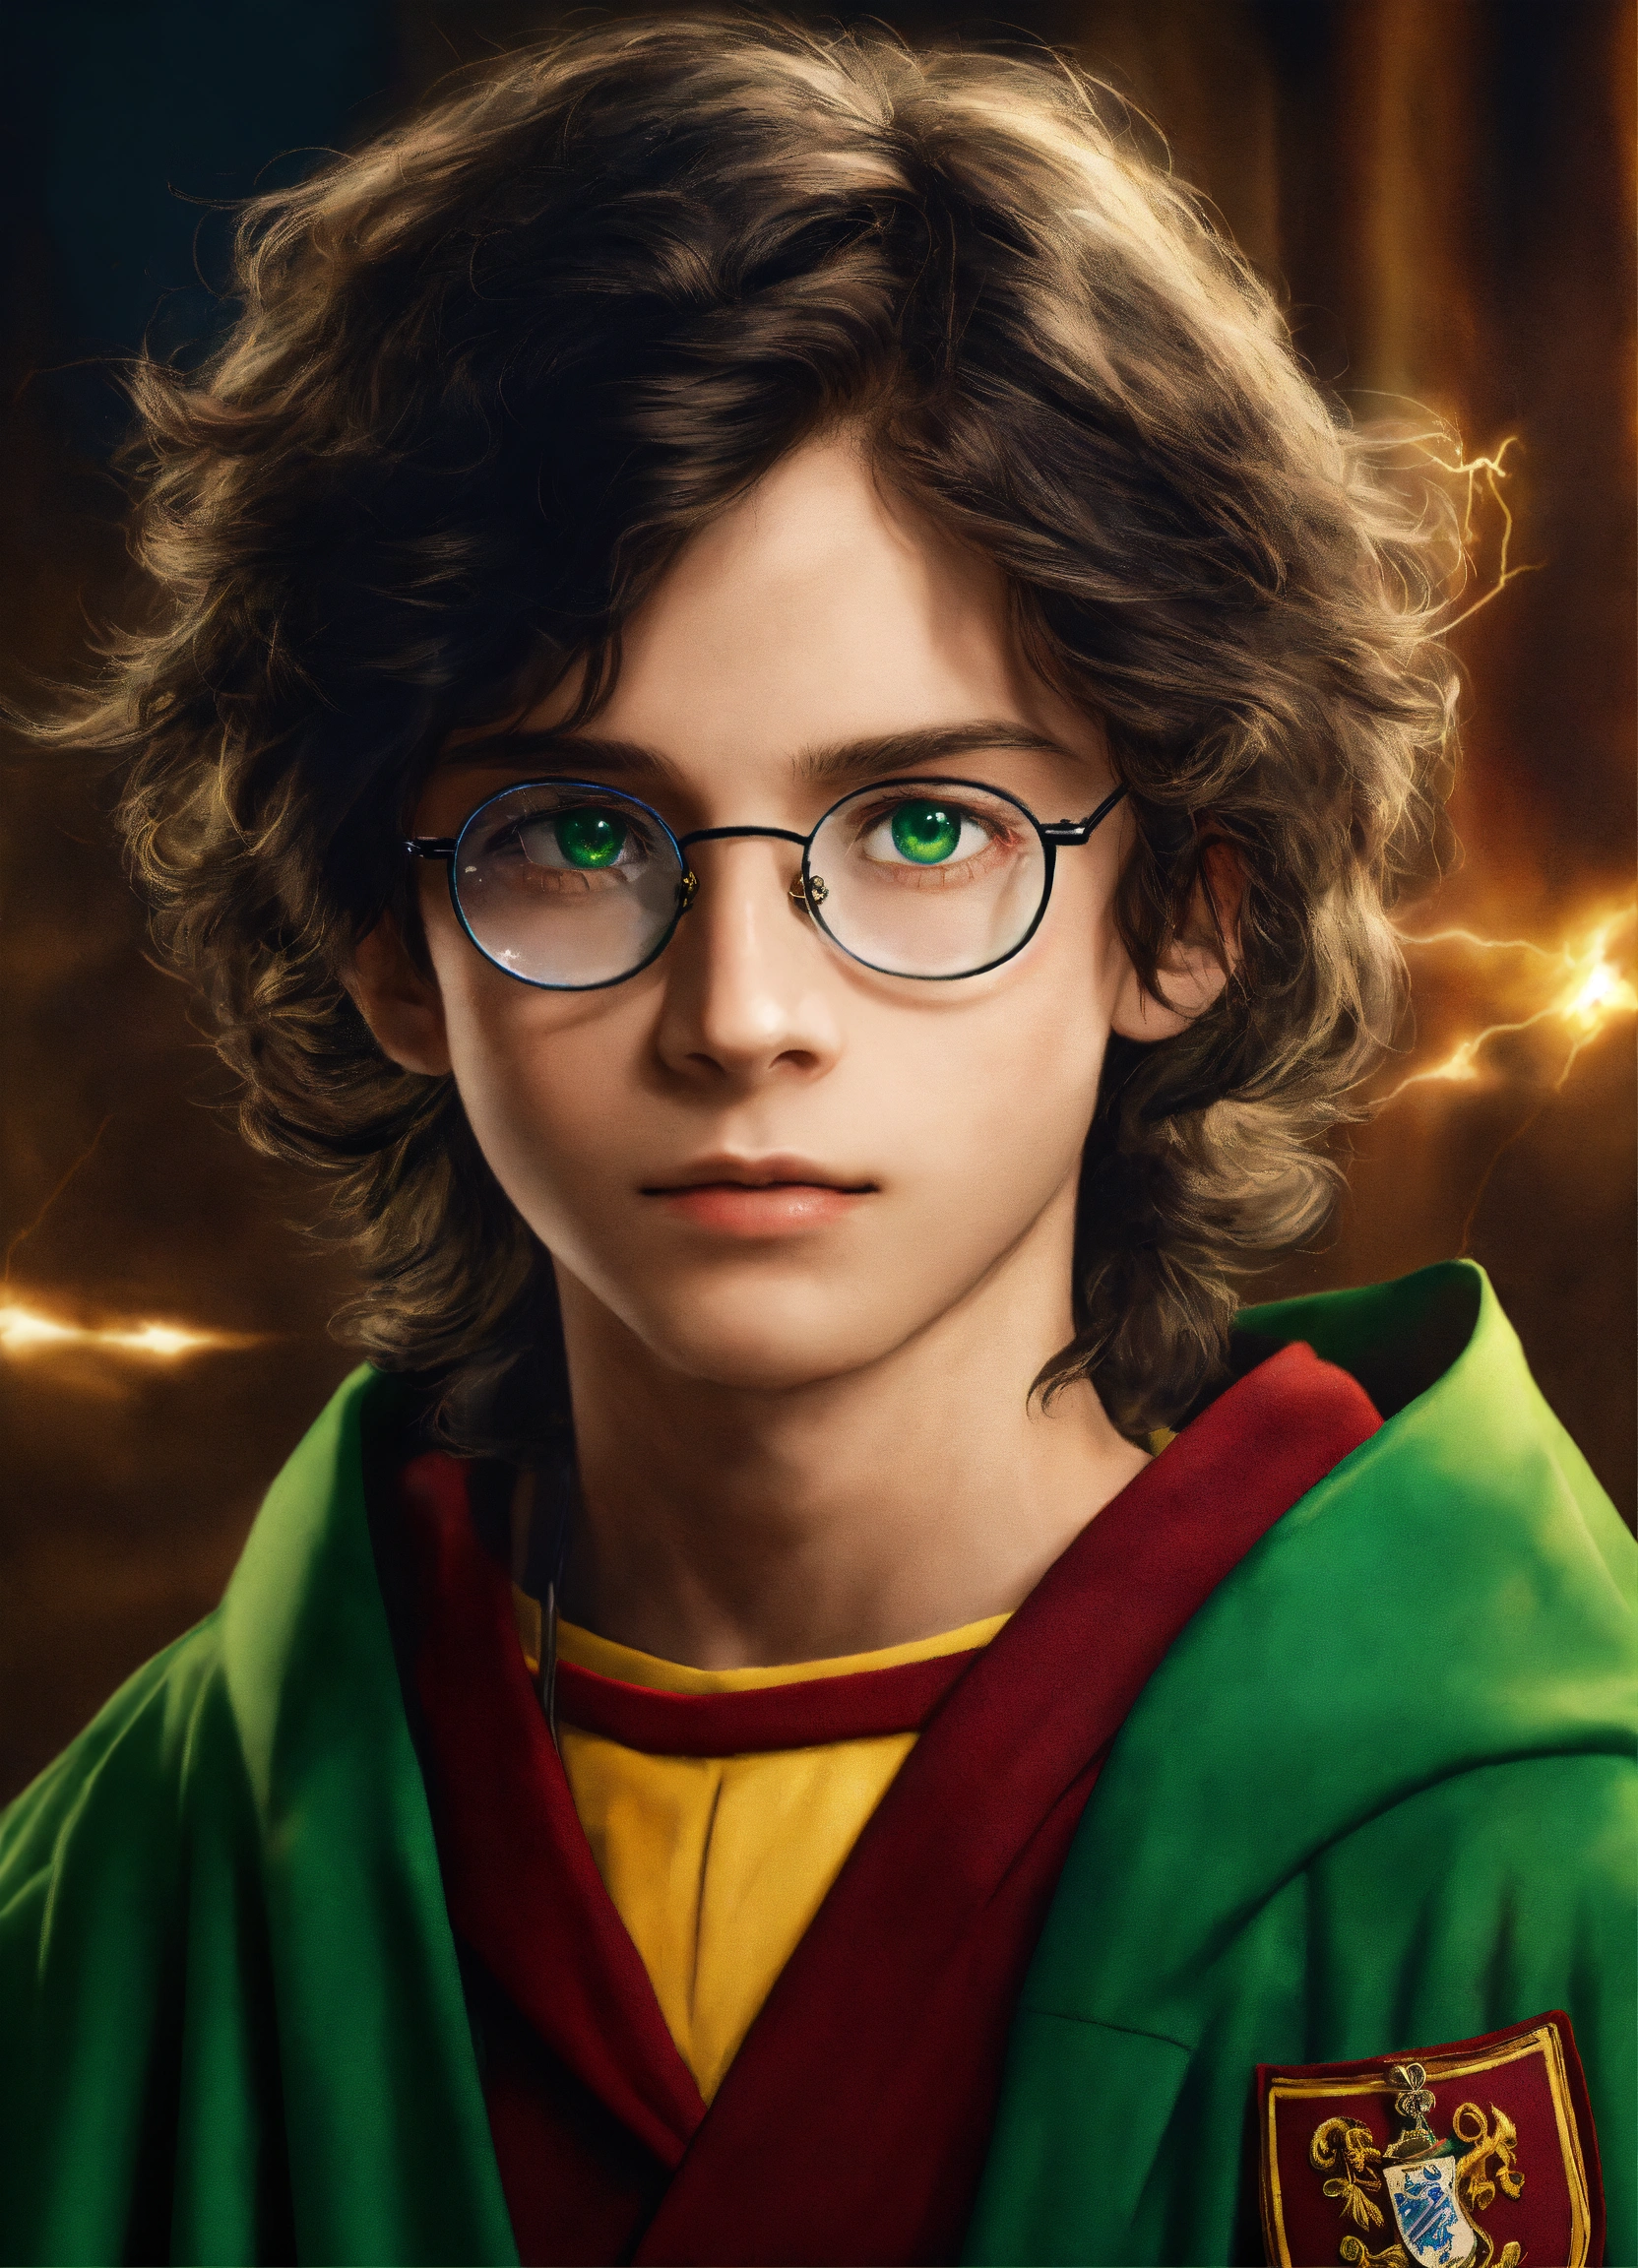 Гарри поттер - волшебные картинки